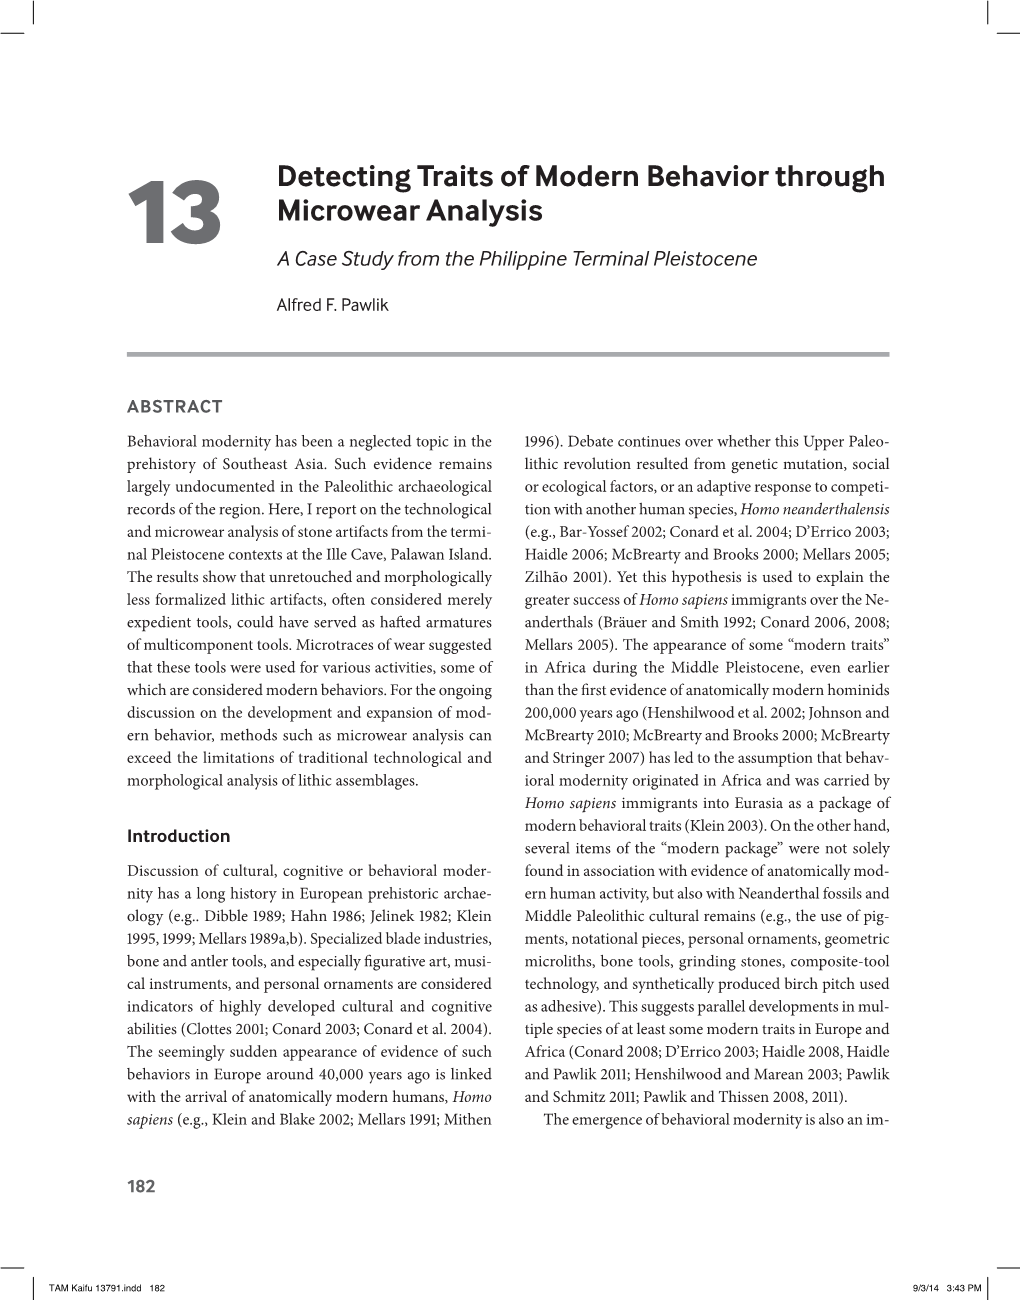 Detecting Traits of Modern Behavior Through Microwear Analysis